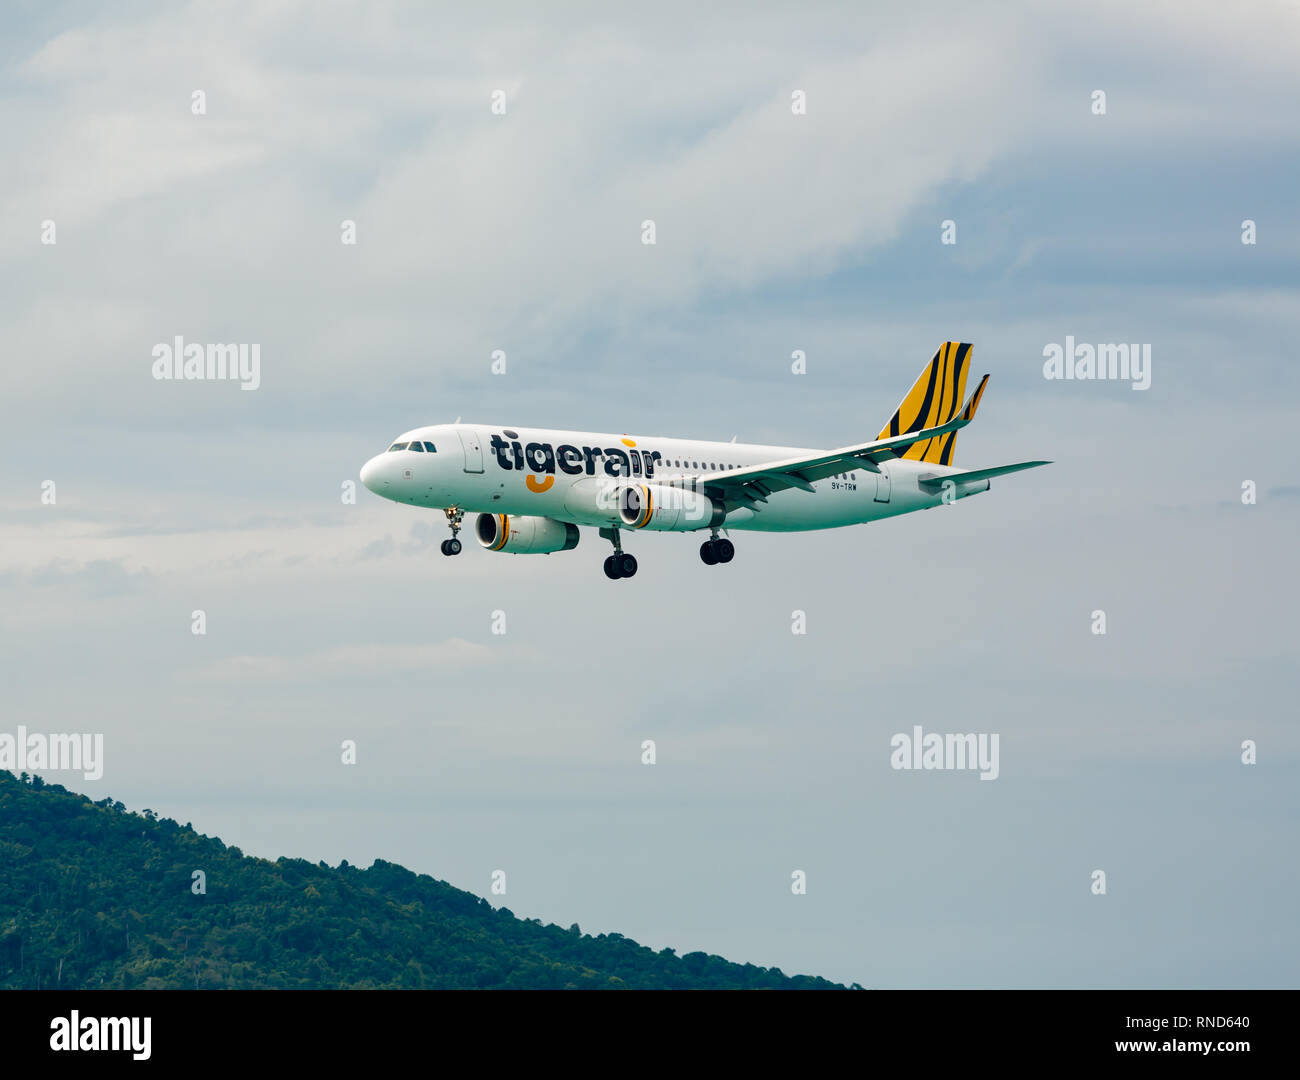 Airbus Tigeair landing approach Stock Photo